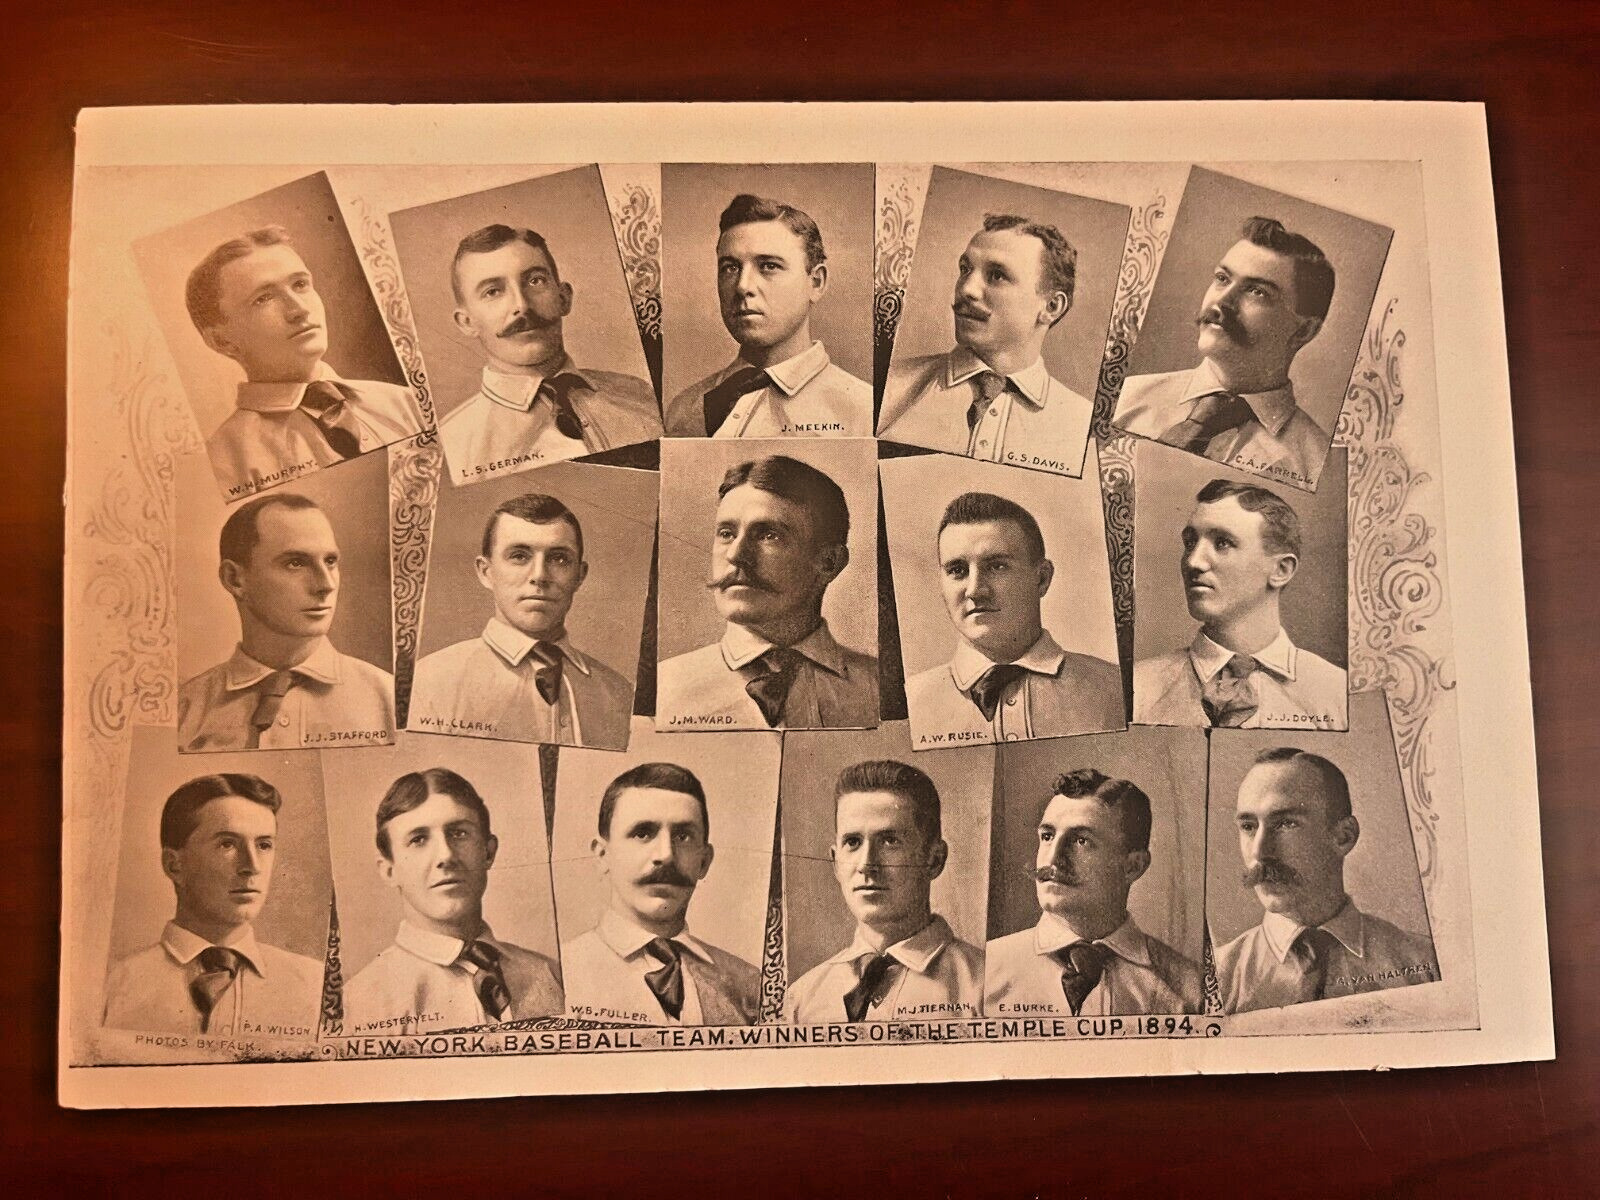 1894 LITHOGRAPH OF NEW YORK BASEBALL TEAM CHAMPIONS - ORIGINAL LITHOGRAPH PRINT